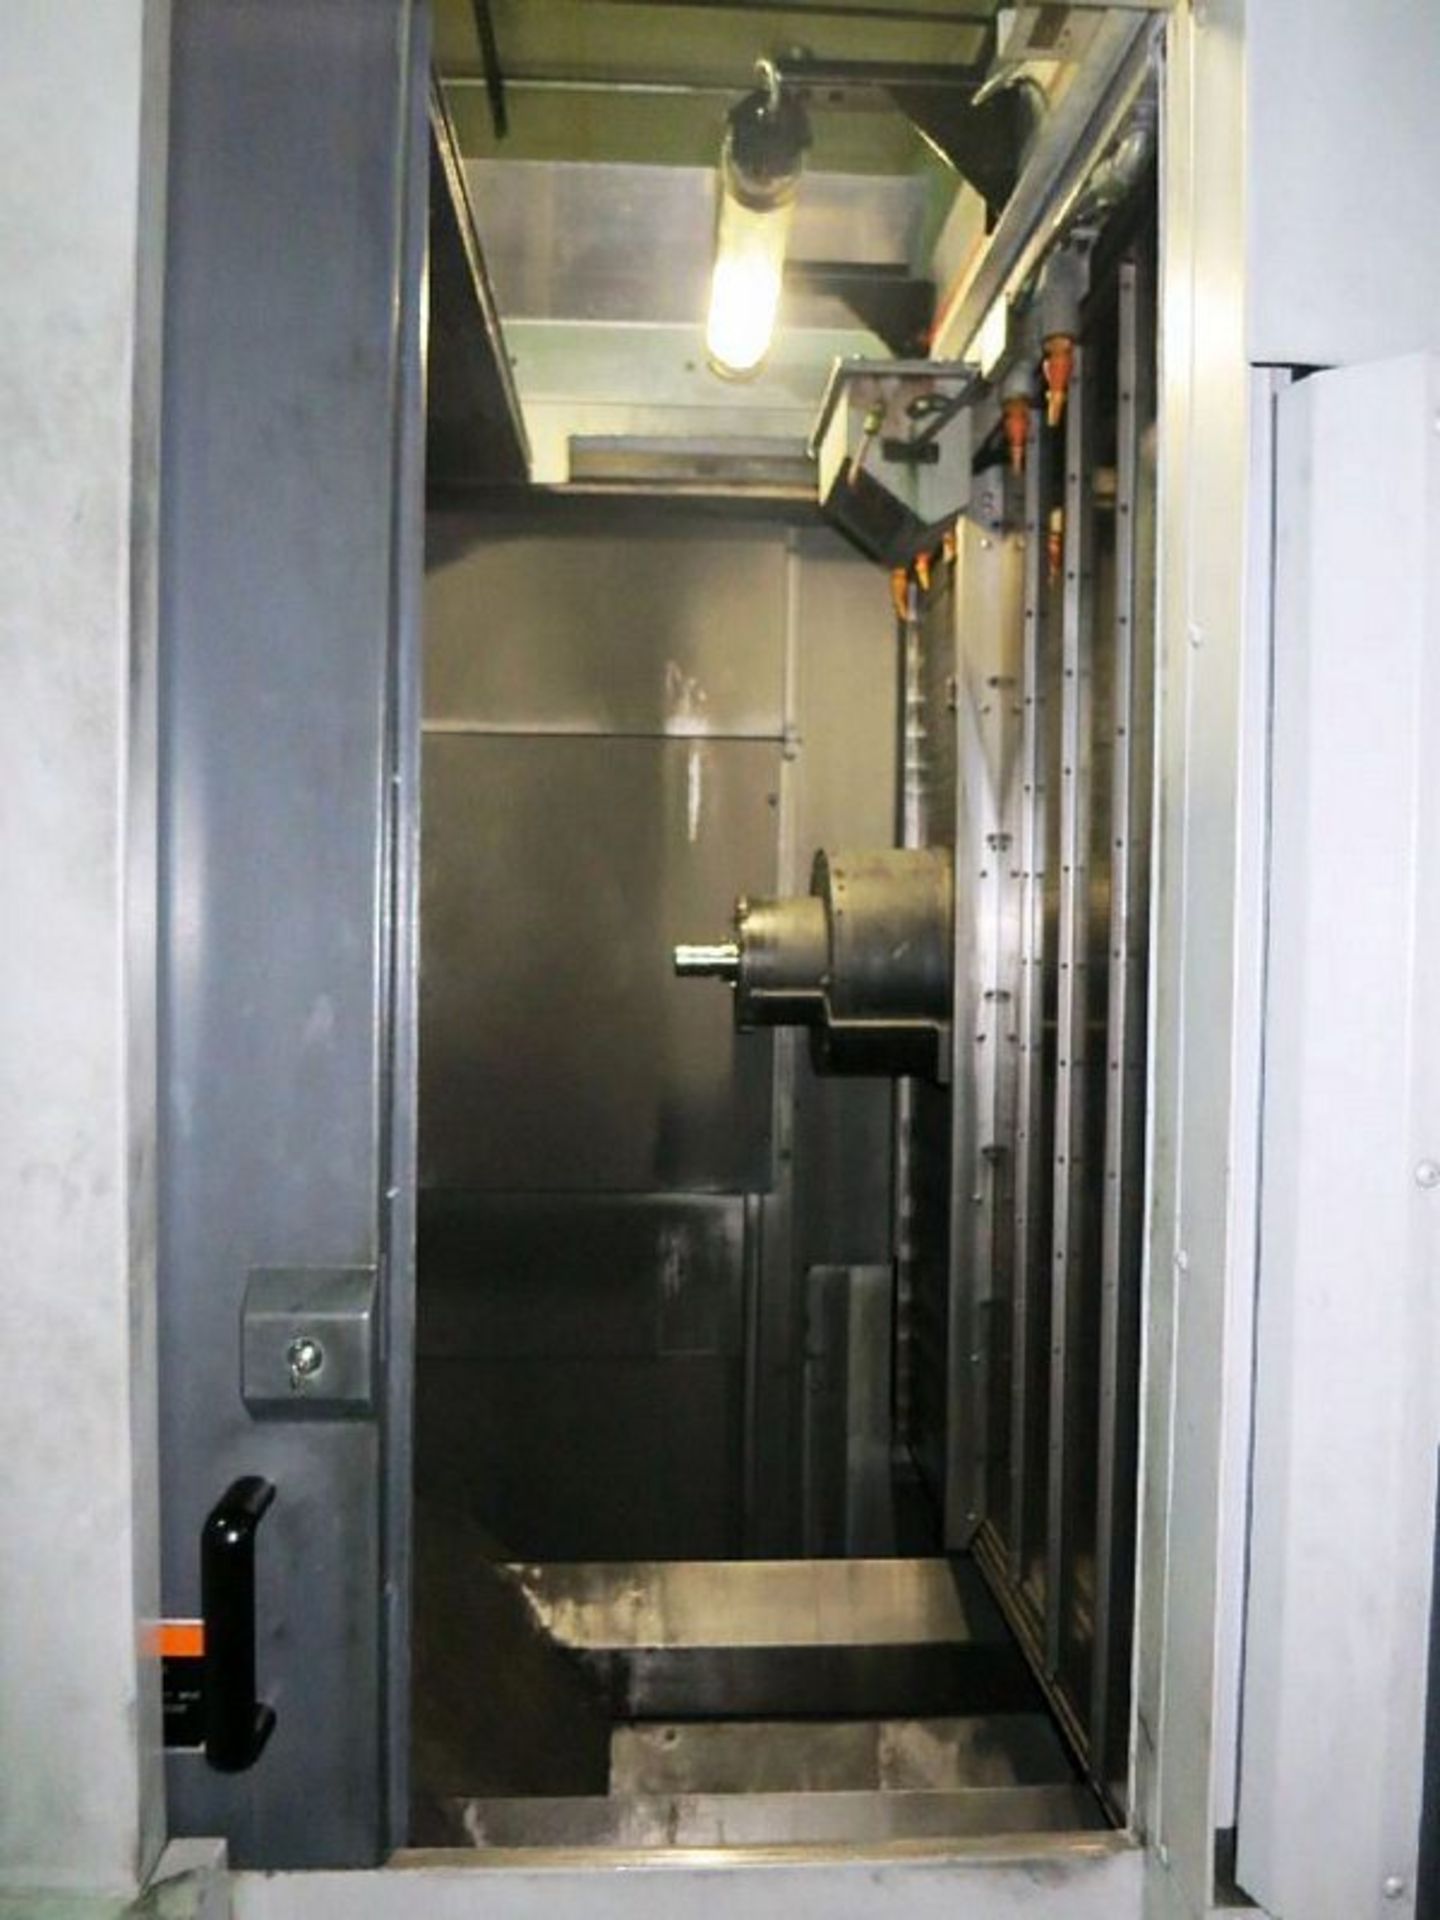 MORI SEIKI MODEL NH5000 CNC PRECISION HIGH SPEED HORIZONTAL MACHINING CENTER, S/N 00815, NEW 2005 - Image 11 of 11